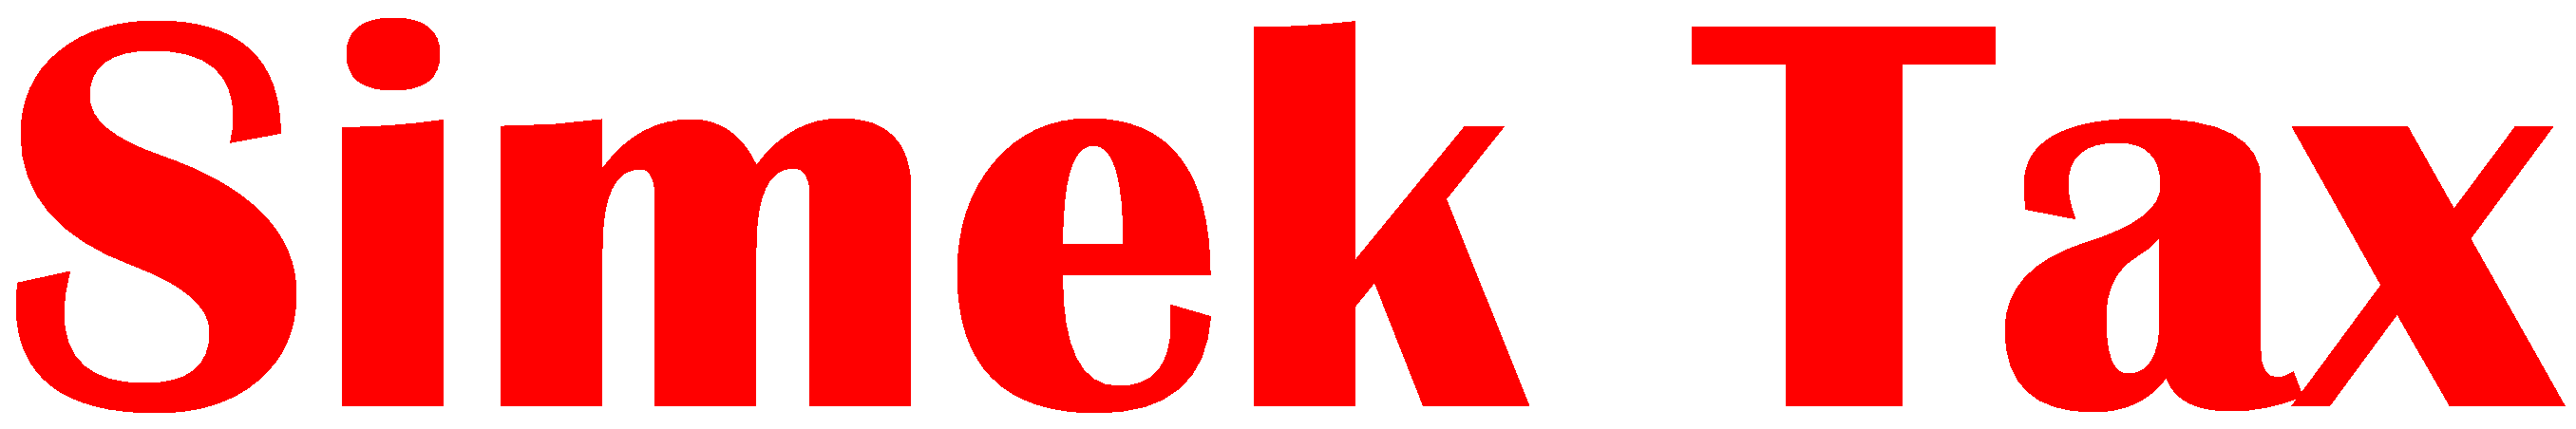 Simek Tax